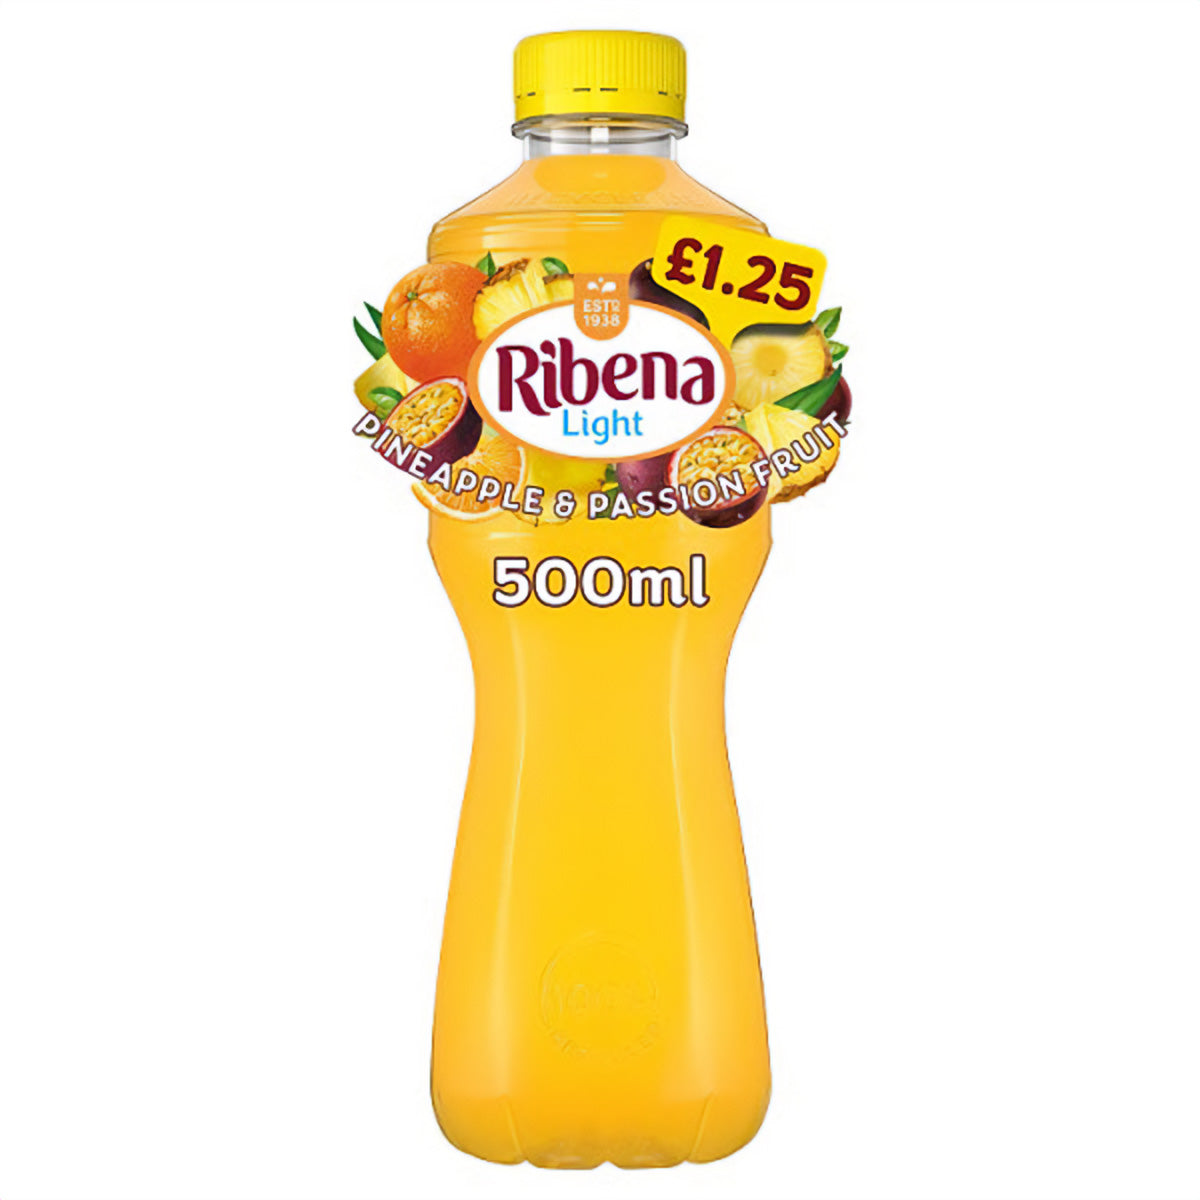 Ribena - Light Pineapple & Passion Fruit Juice Drink - 500ml - Continental Food Store